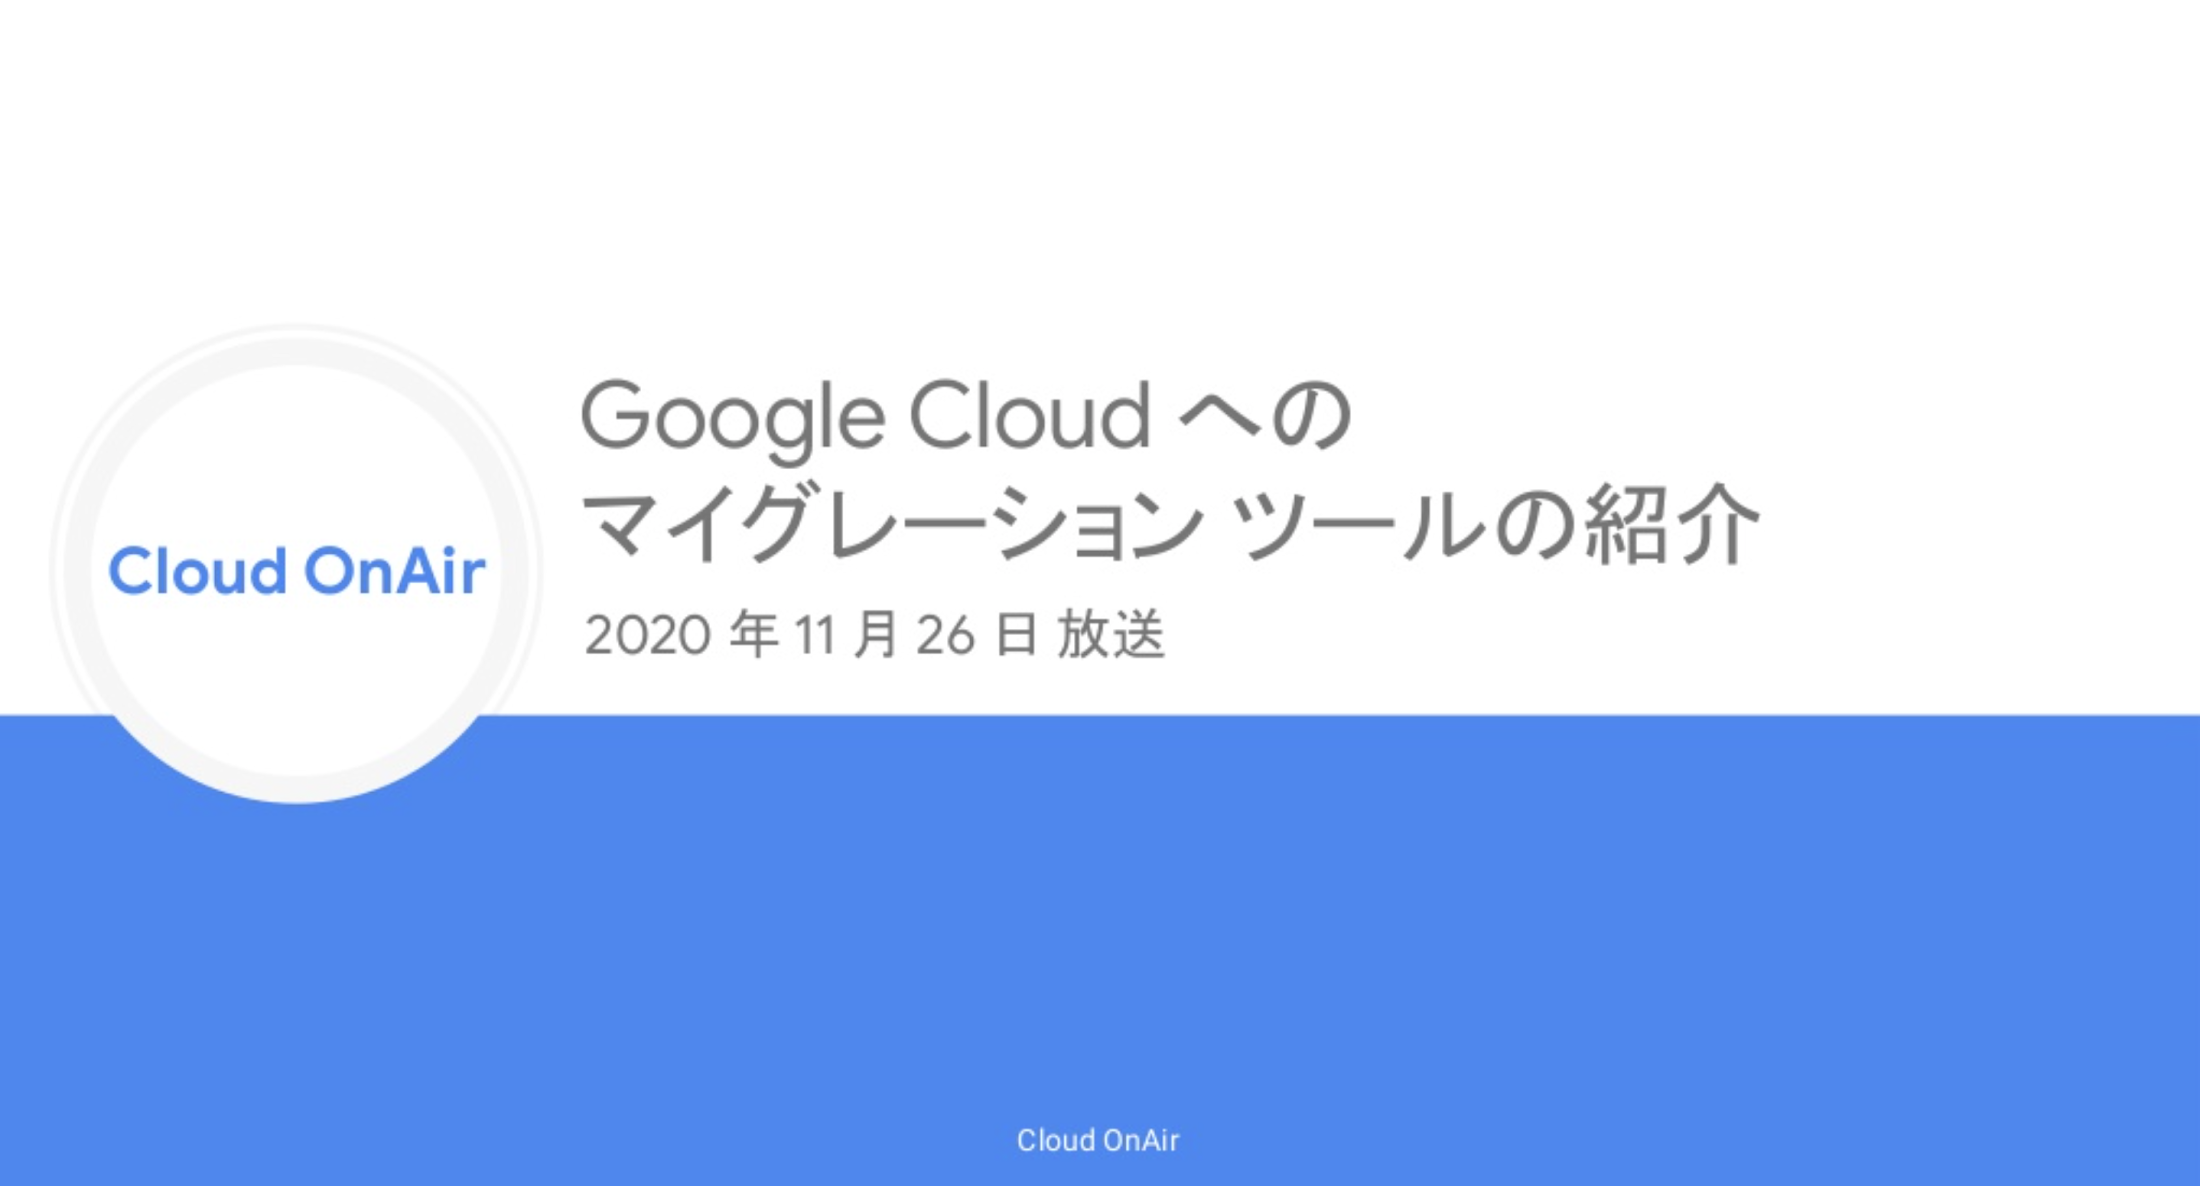 https://storage.googleapis.com/gweb-cloudblog-publish/images/sukurinshiyotsuto_2020-12-02_18.23.44.max-2200x2200.png